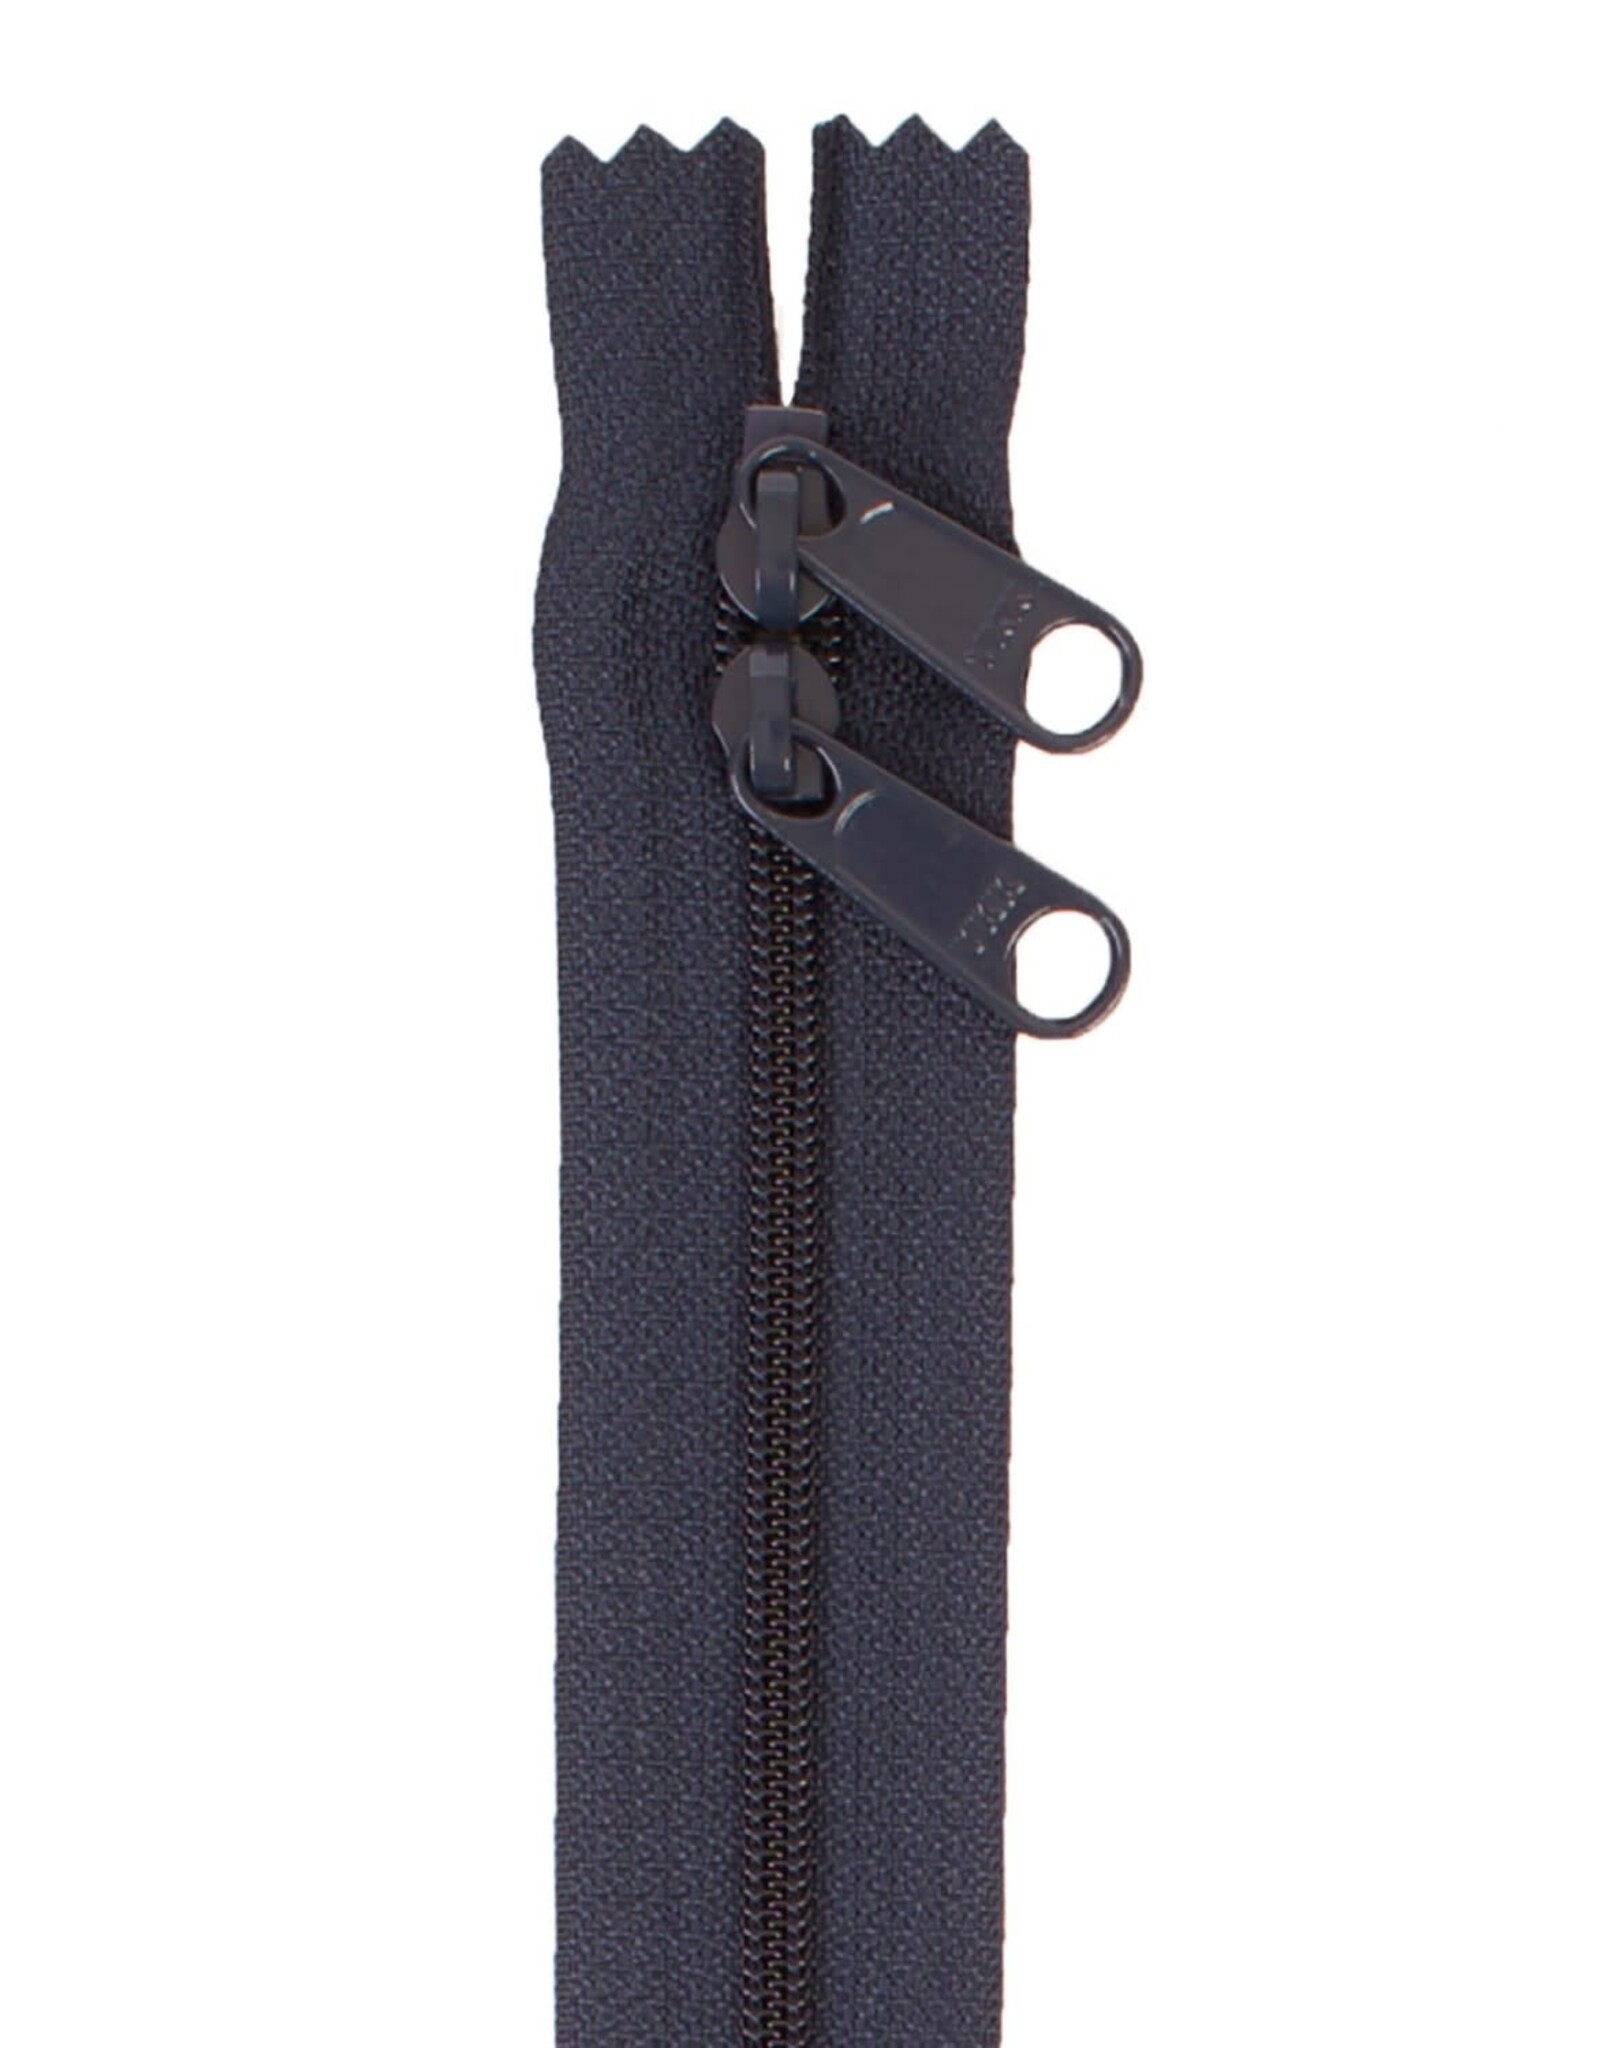 ByAnnie Handbag Zipper - 30 inch / 76 cm - double slide - Navy